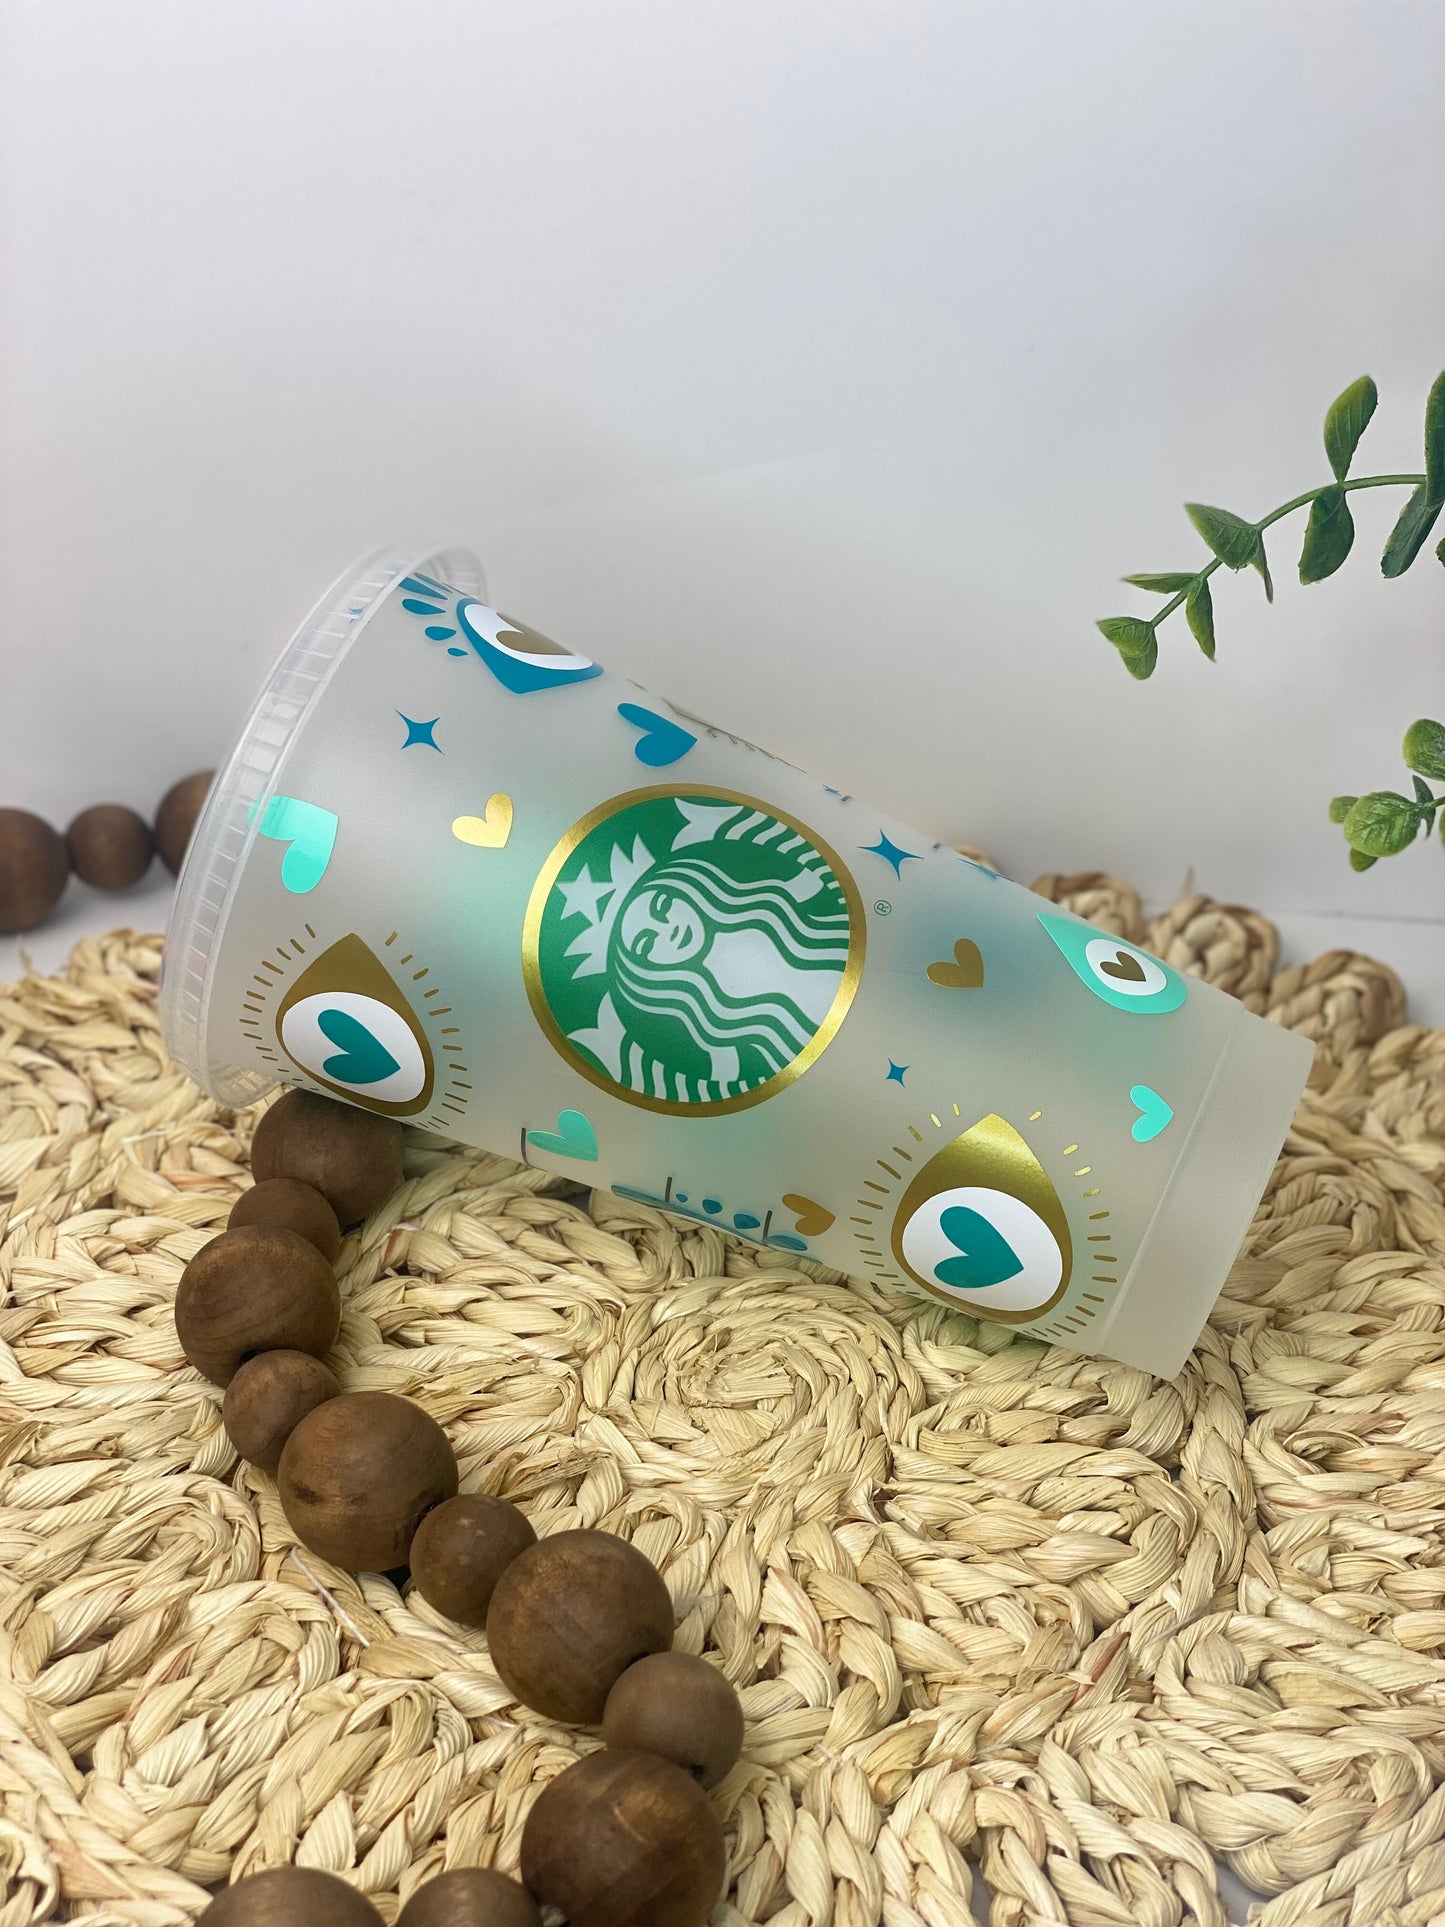 Starbucks Cups, green mermaid cup, coffee cup, Starbucks drink cup, evil eye, hearts